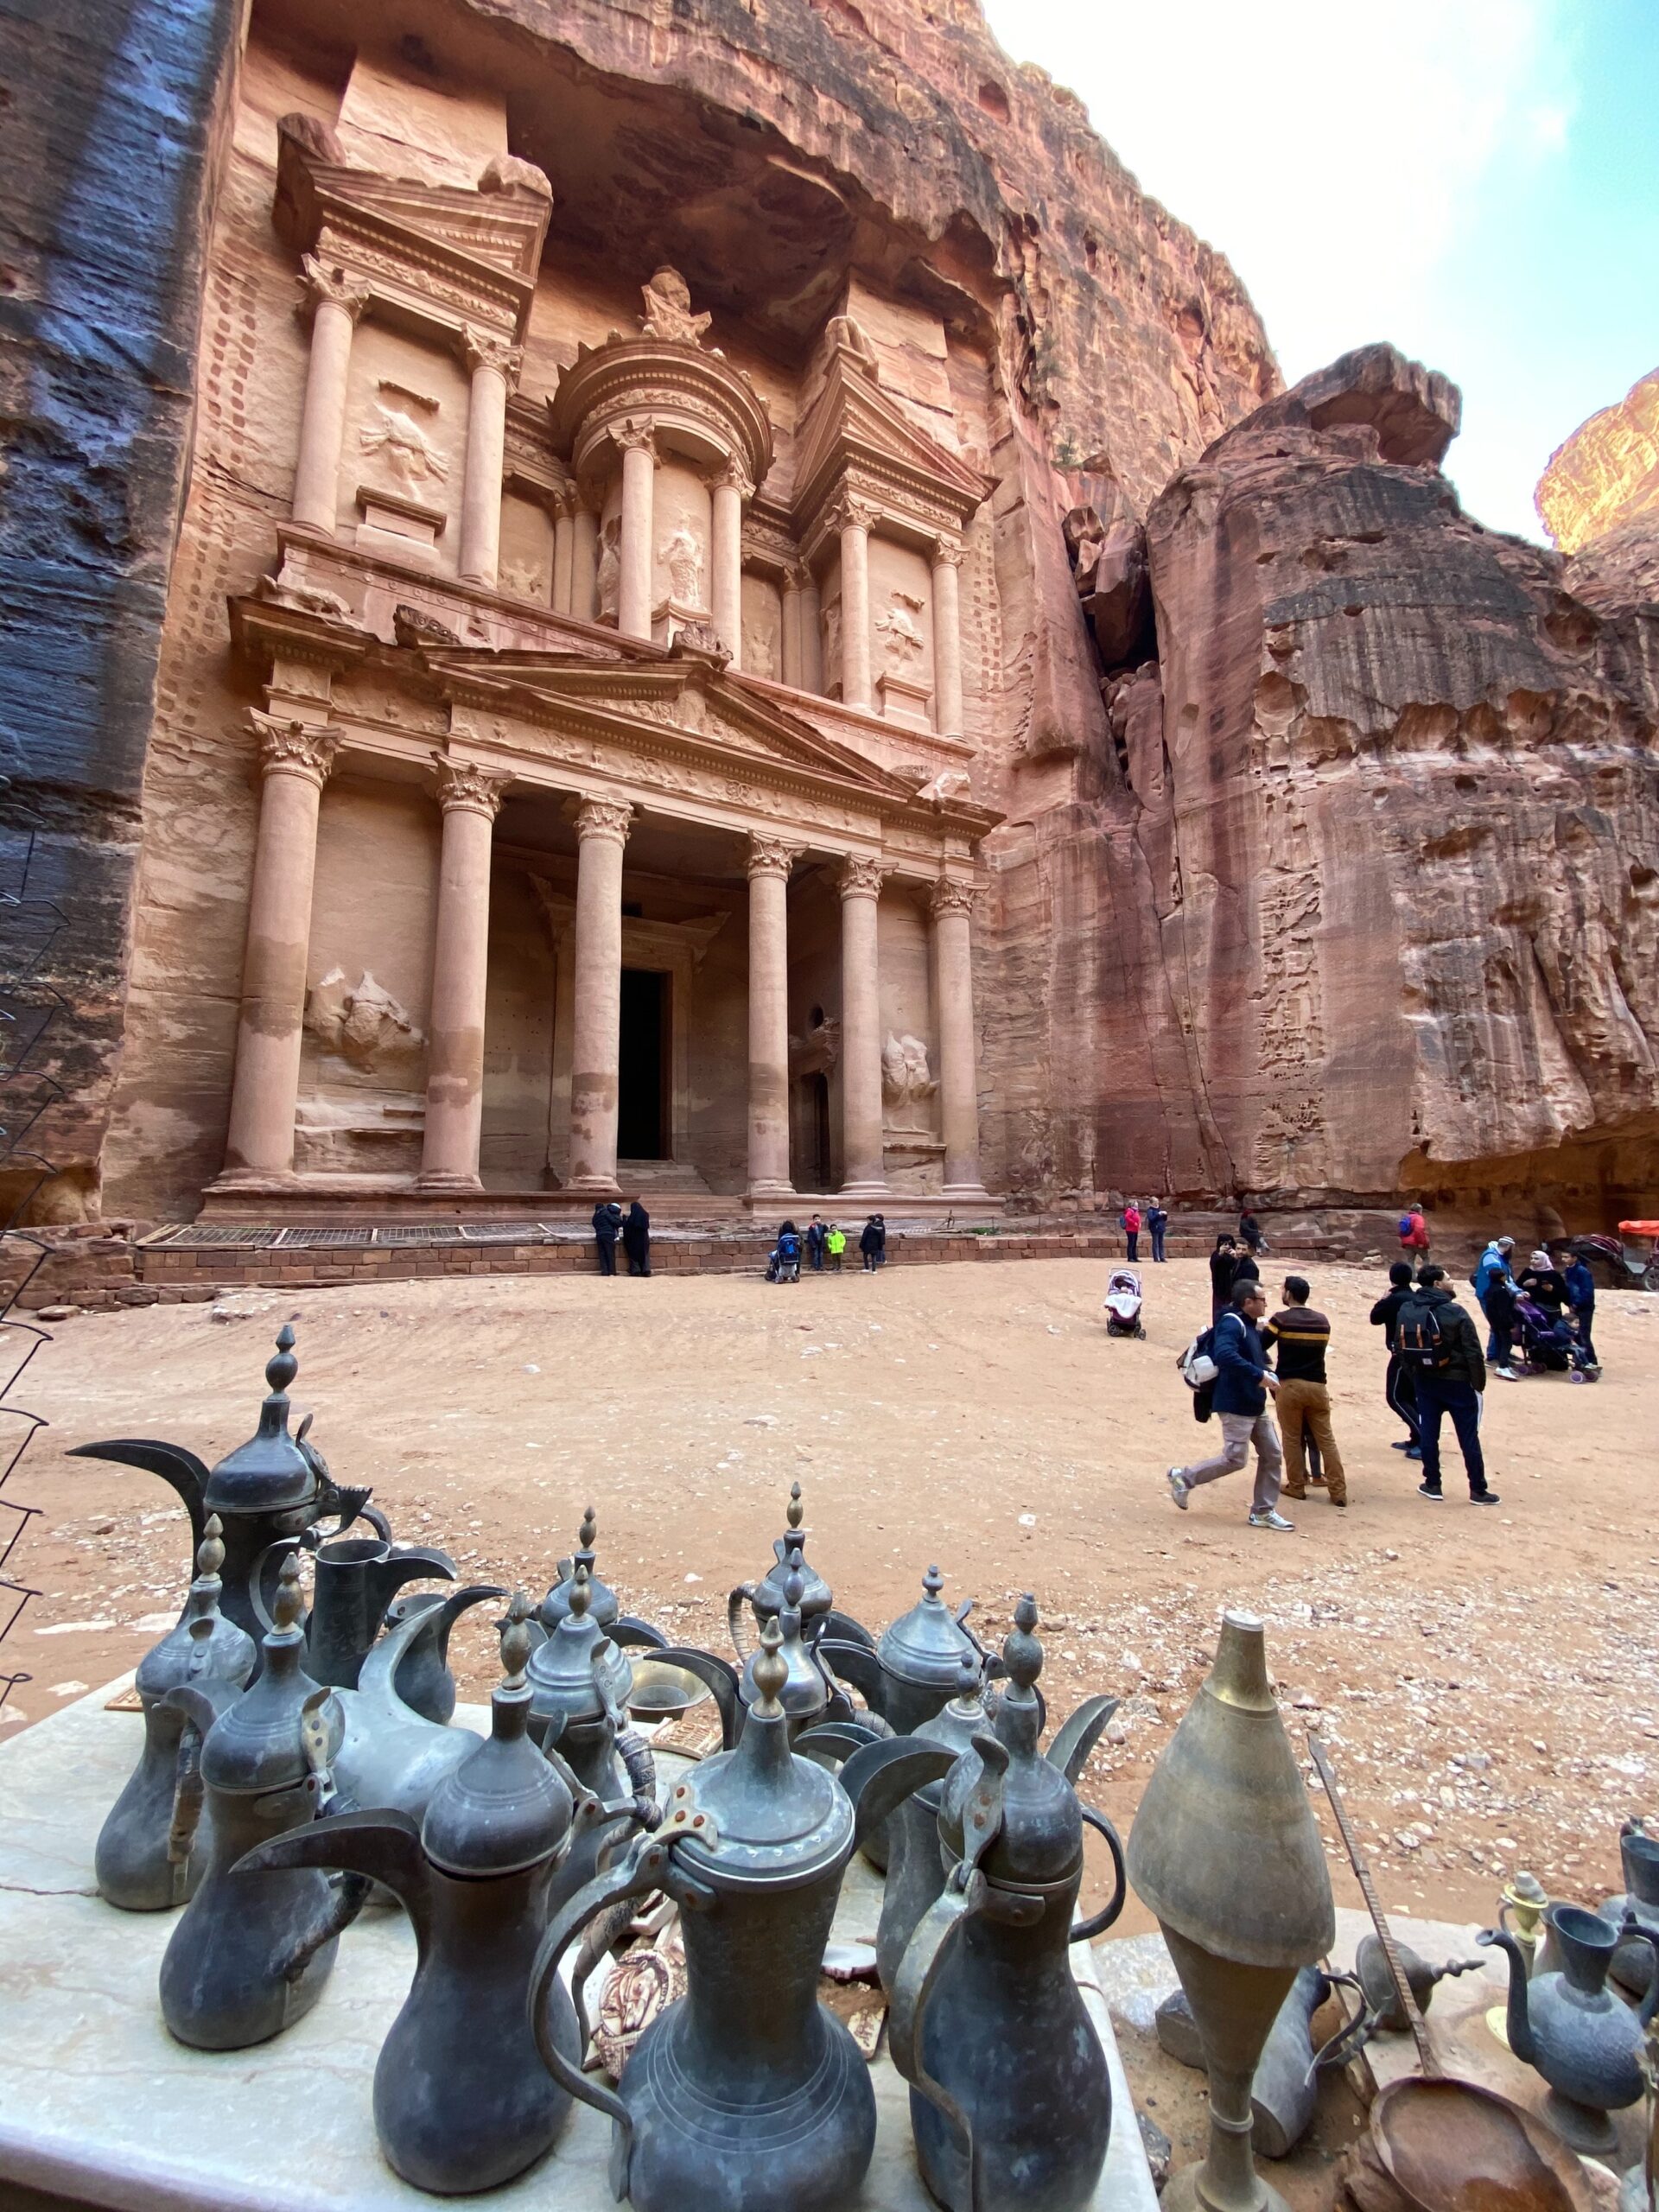 Embark a tour to Jordan and see the tremendous Petra